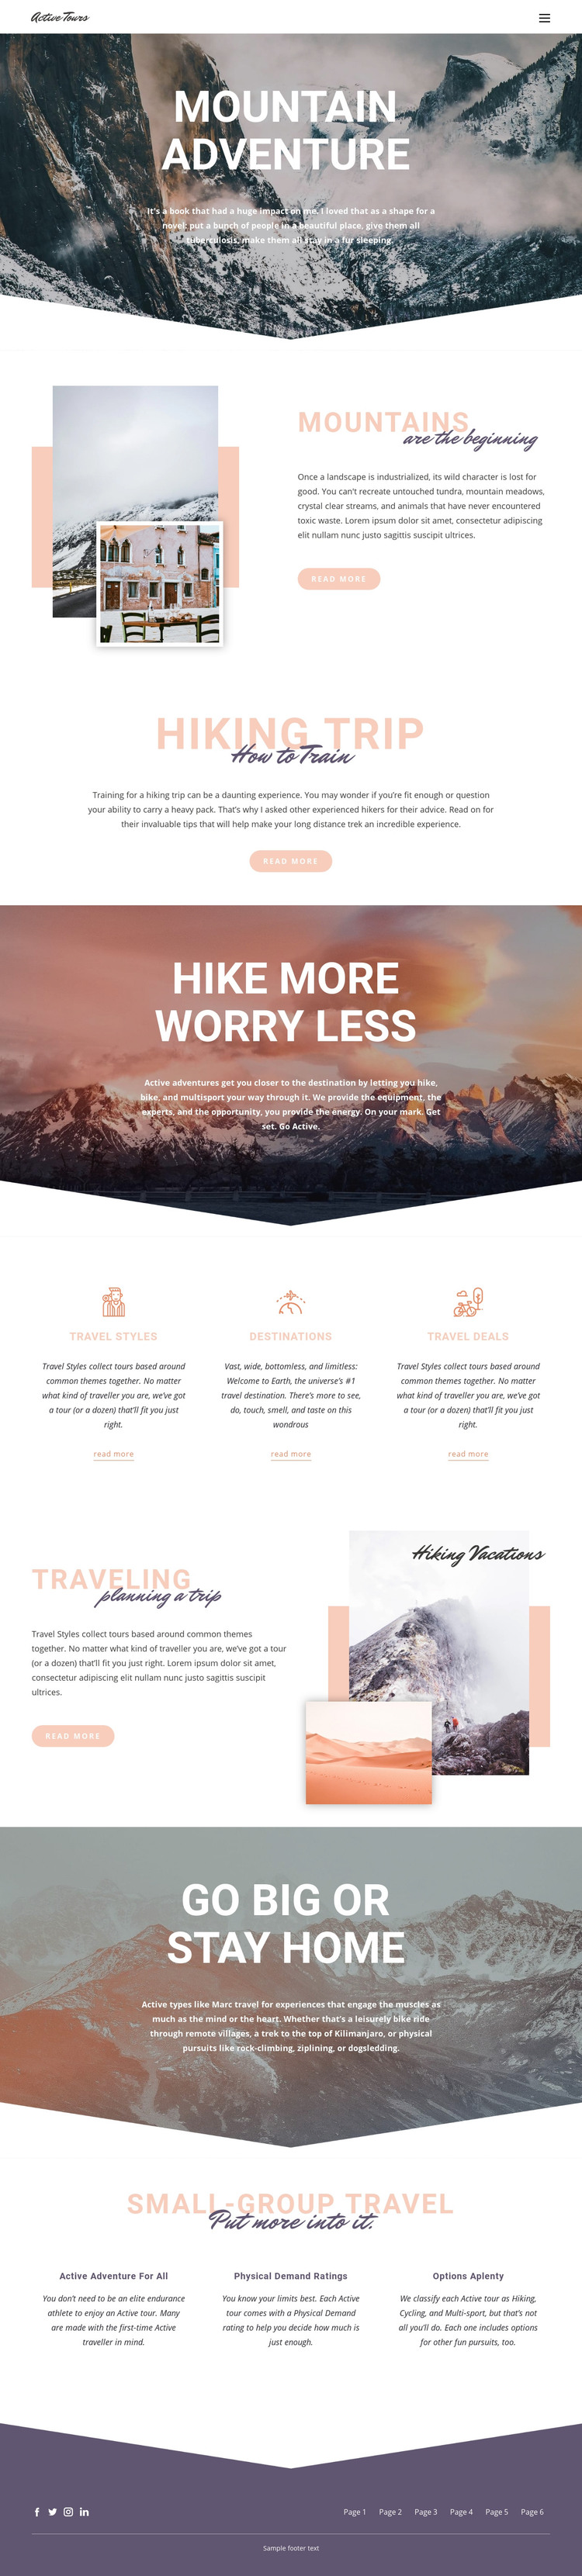 Mountain Adventure Homepage Design